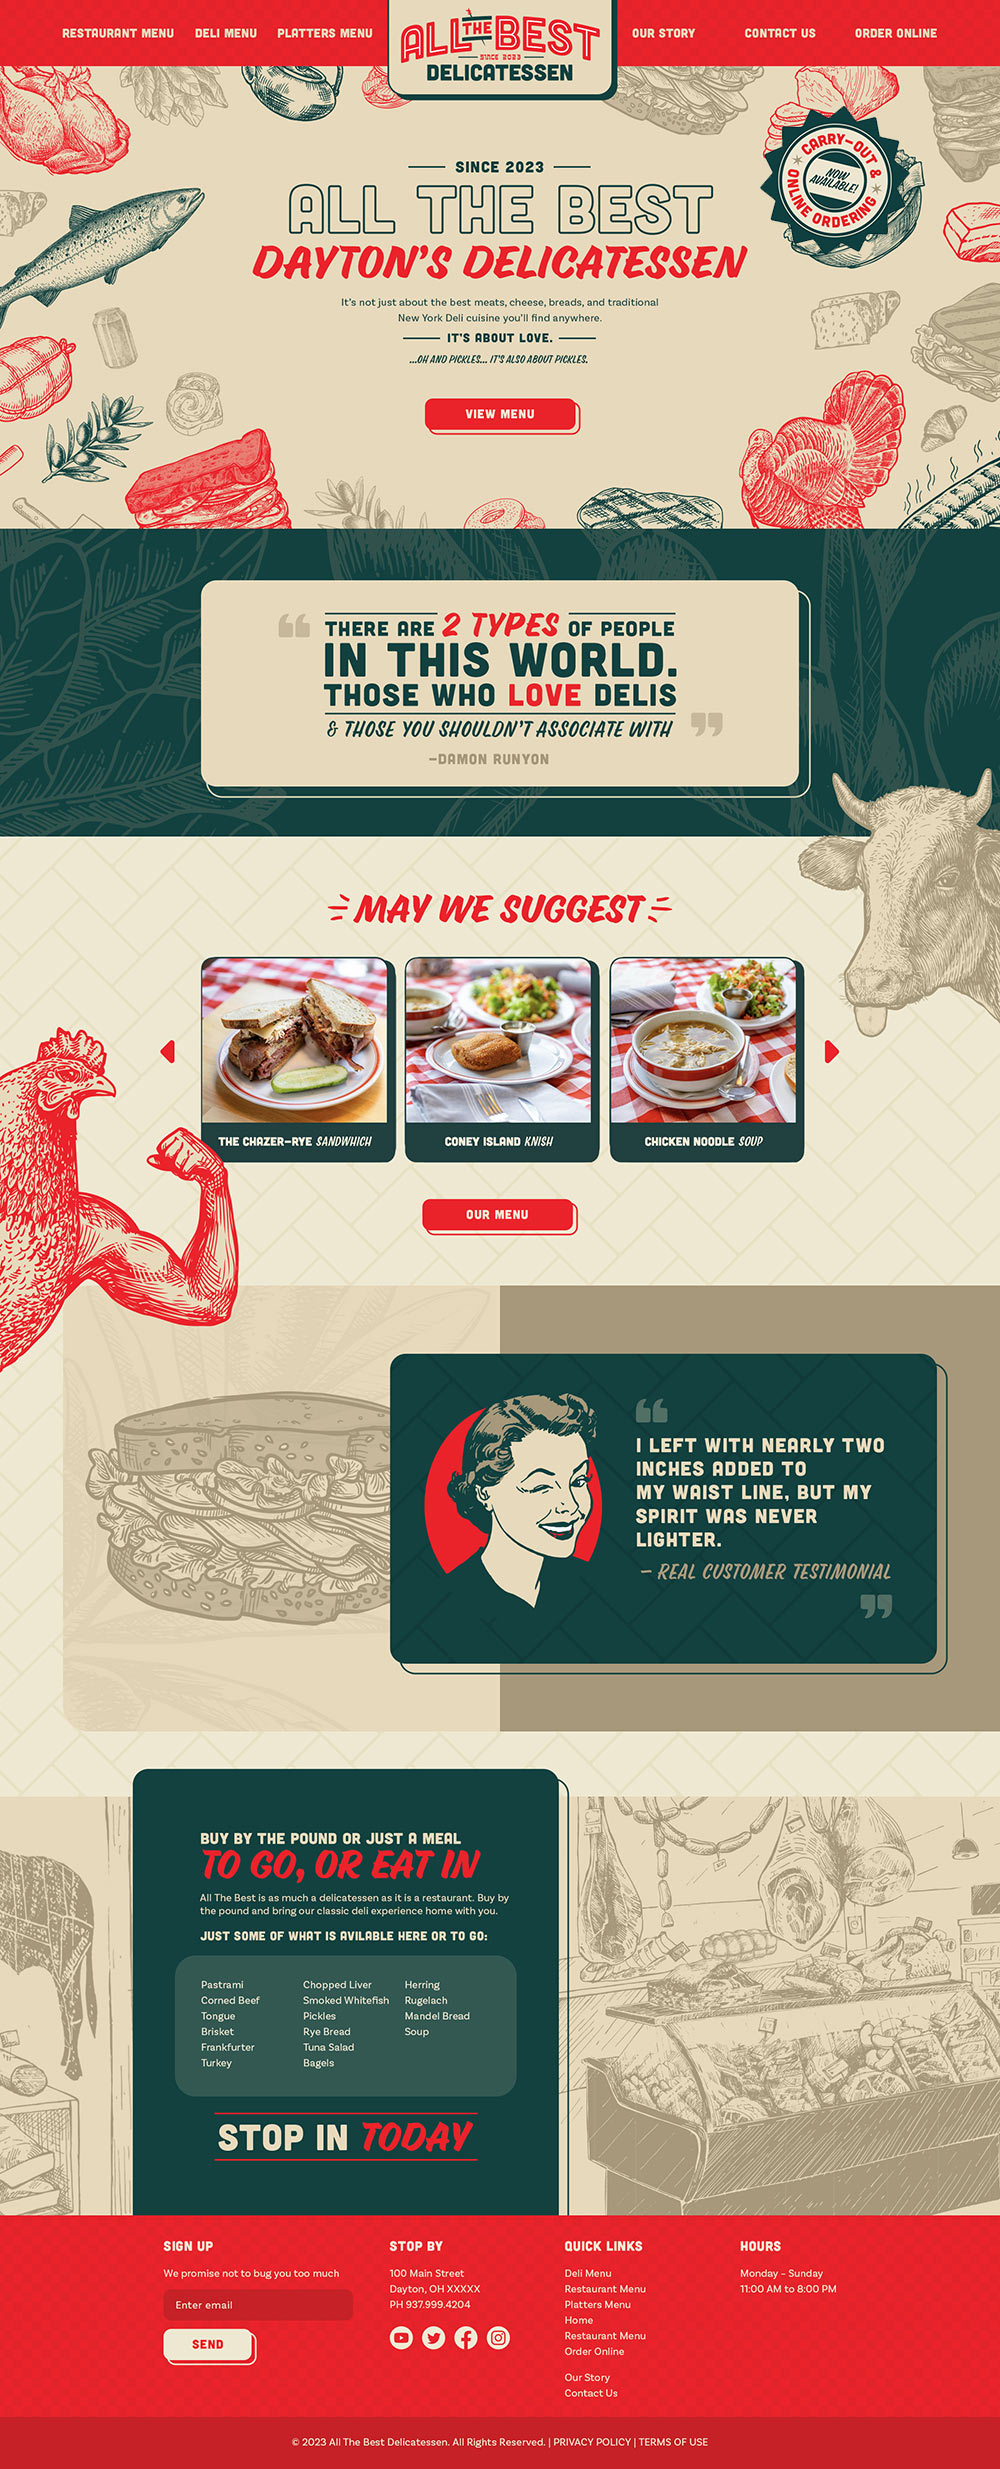 All The Best restaurant website design Dayton